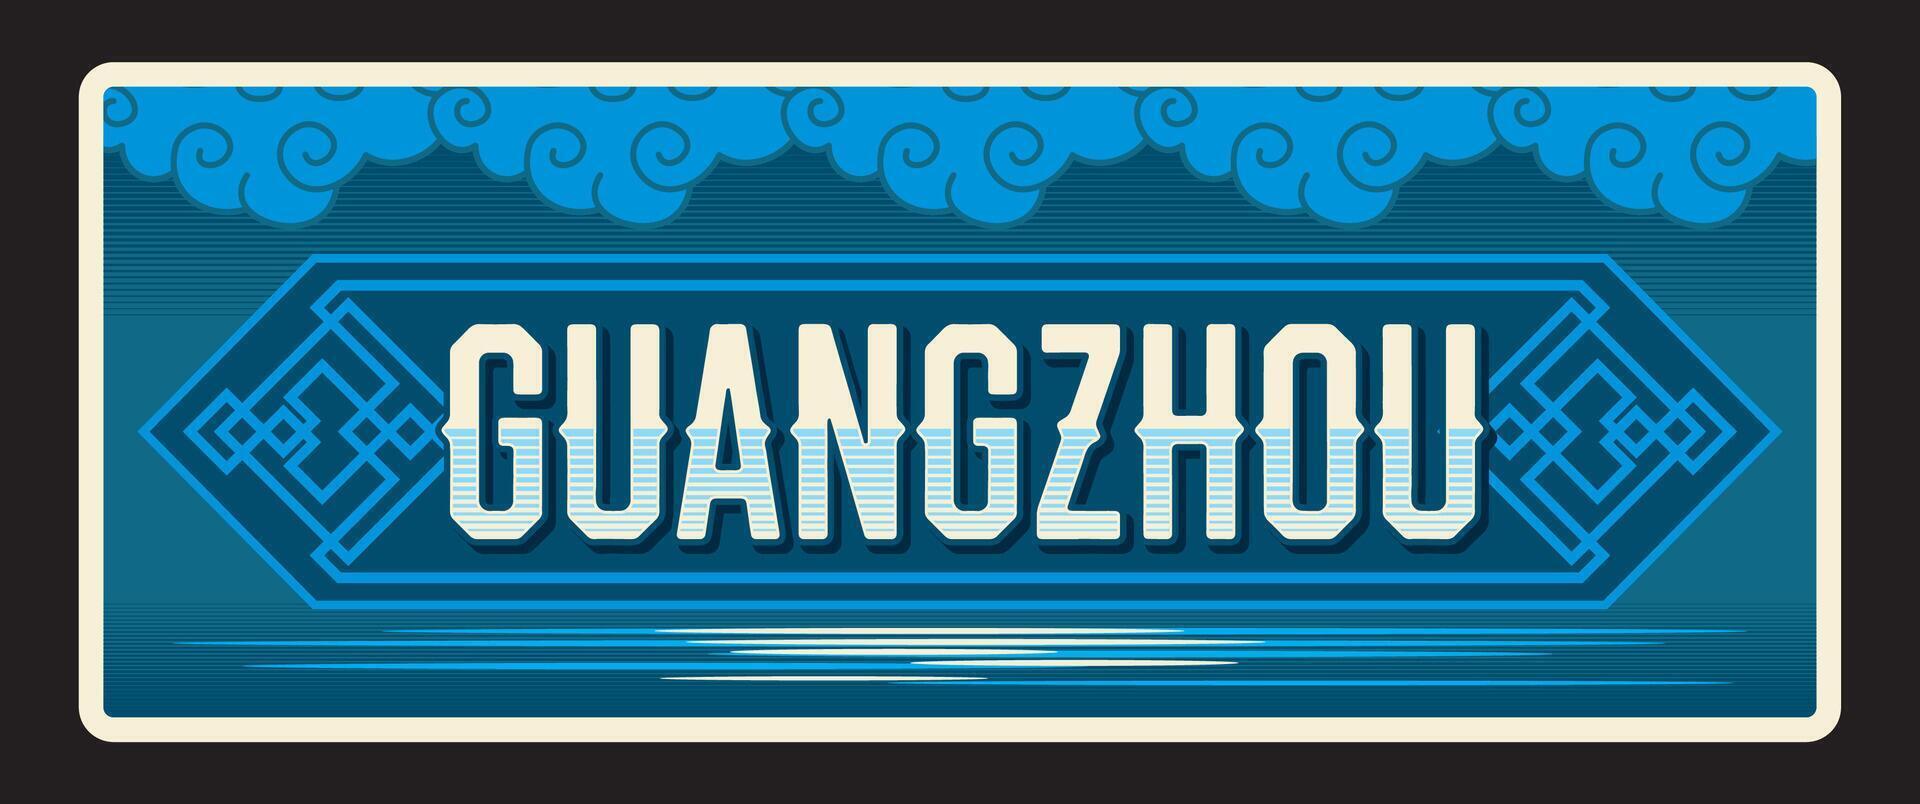 Guangzhou chino ciudad viaje plato vector